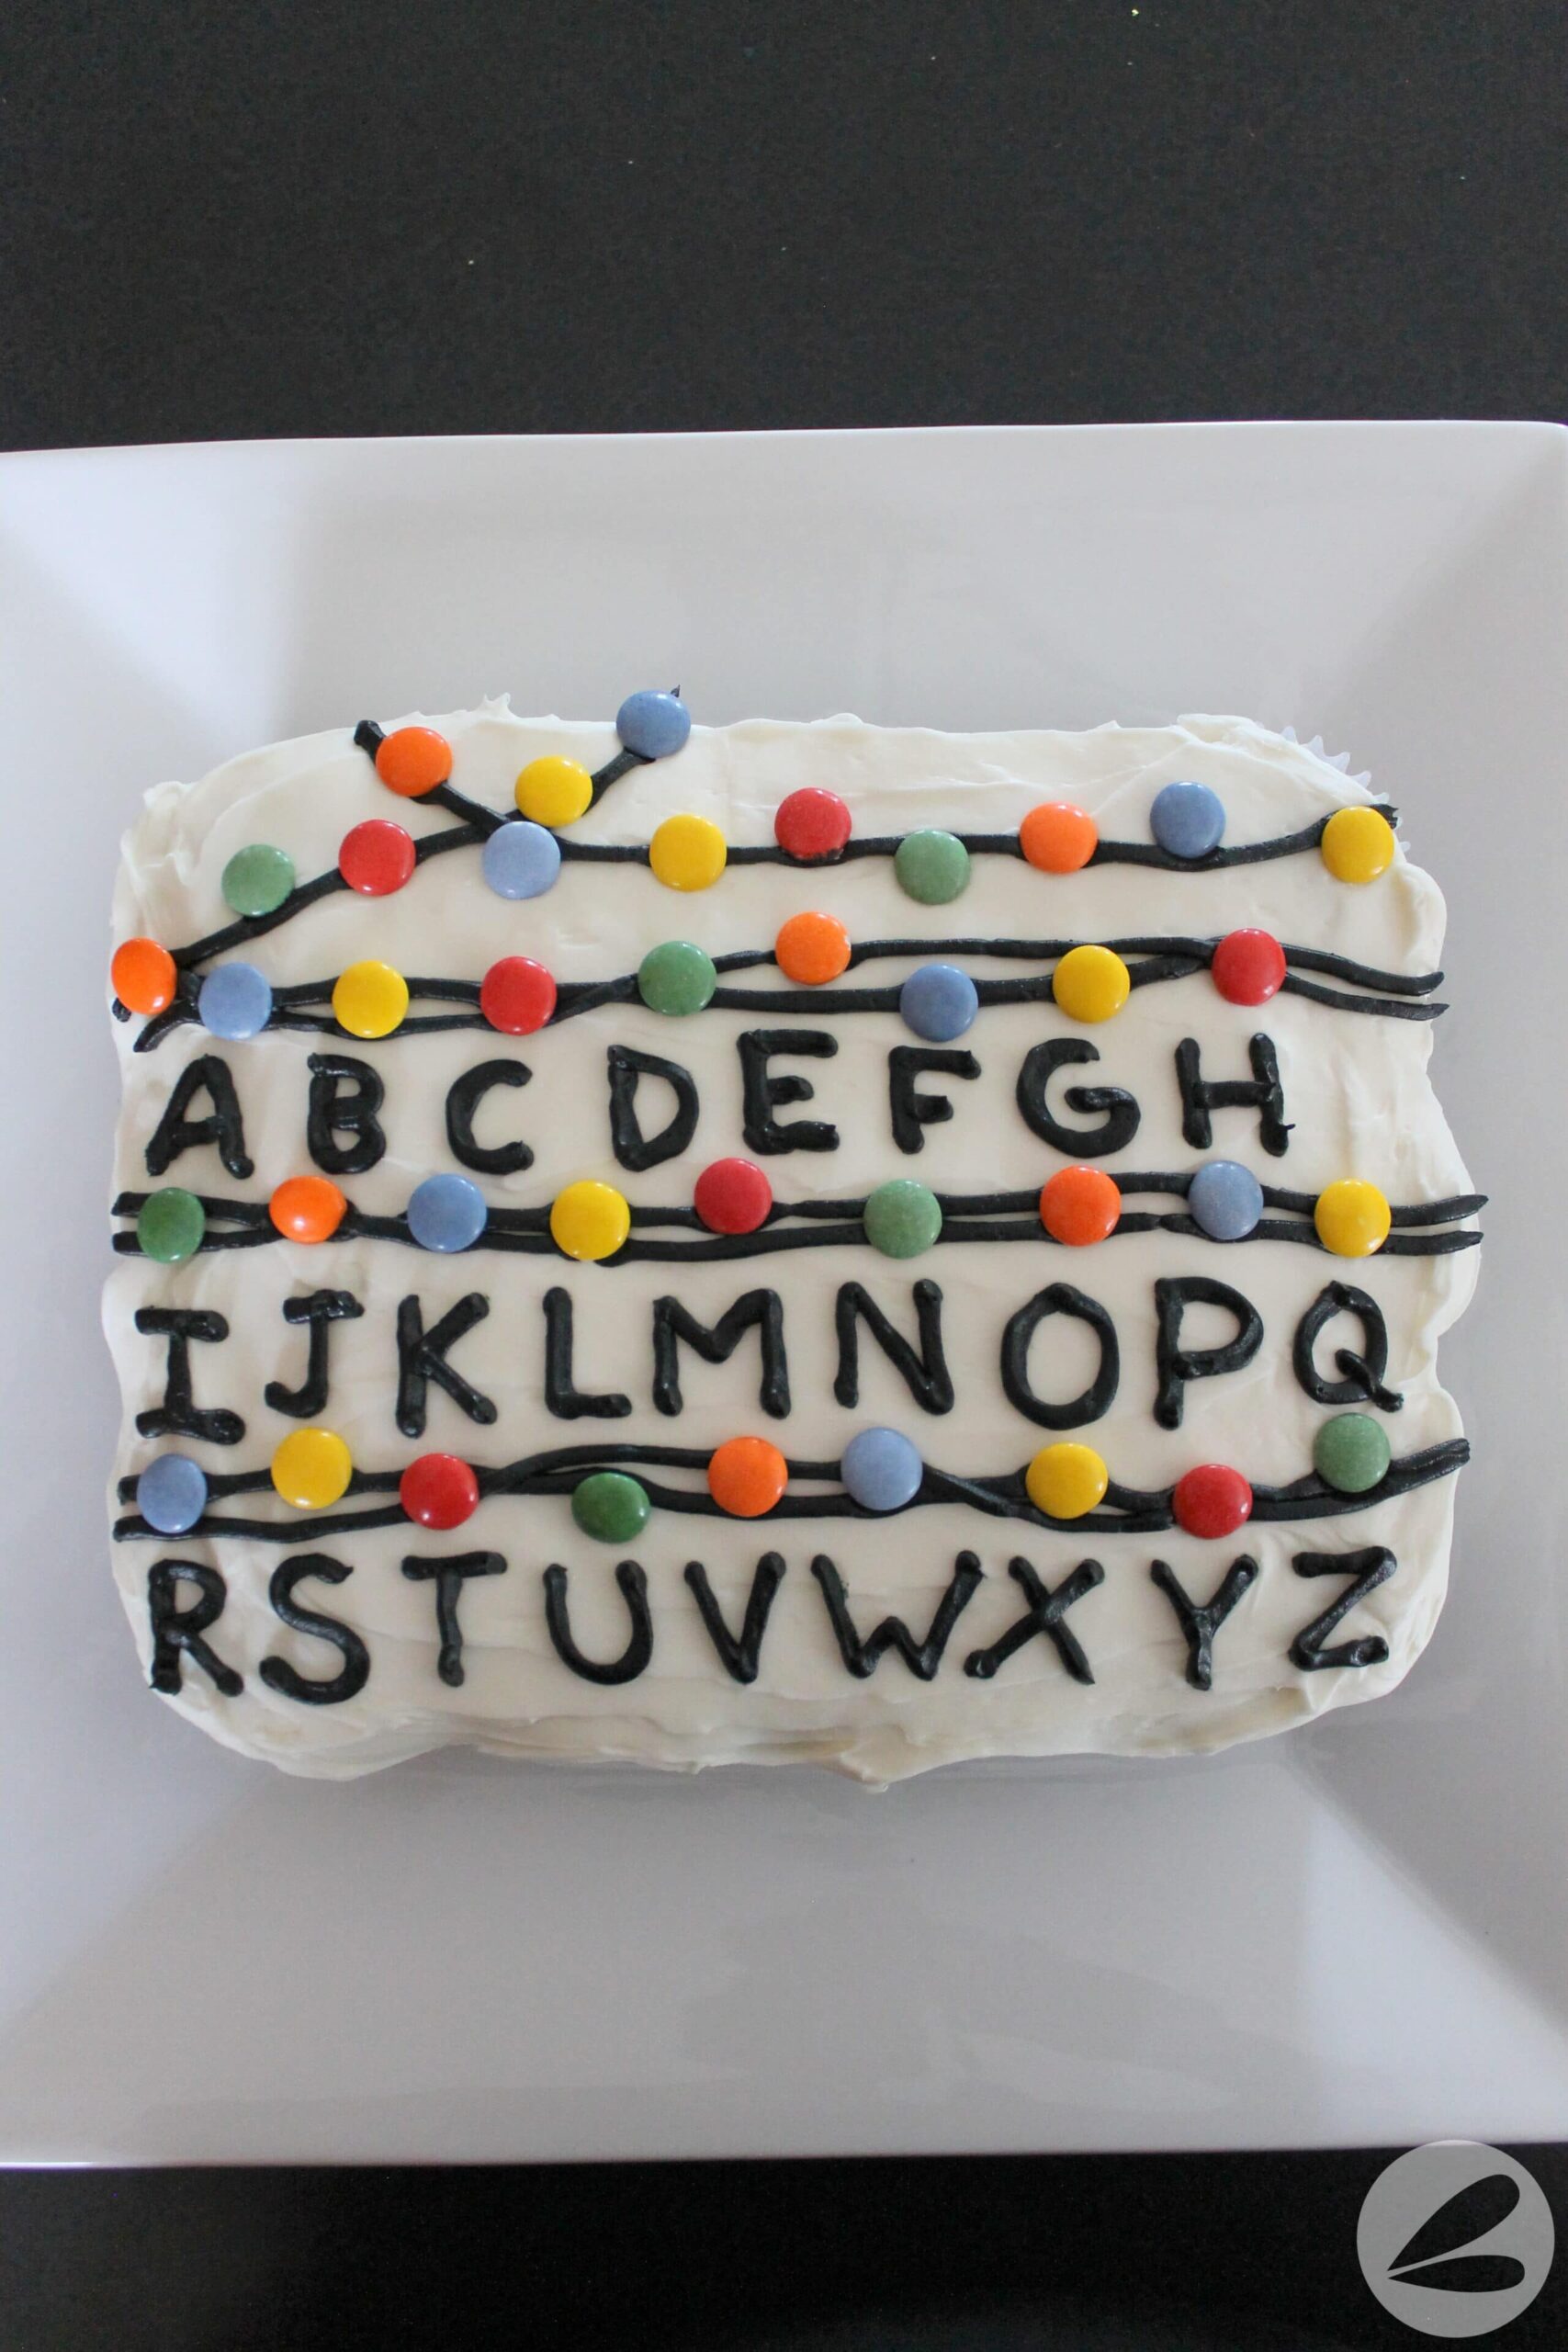 Decorating a 'Stranger Things' Ganache Drip Cake - YouTube